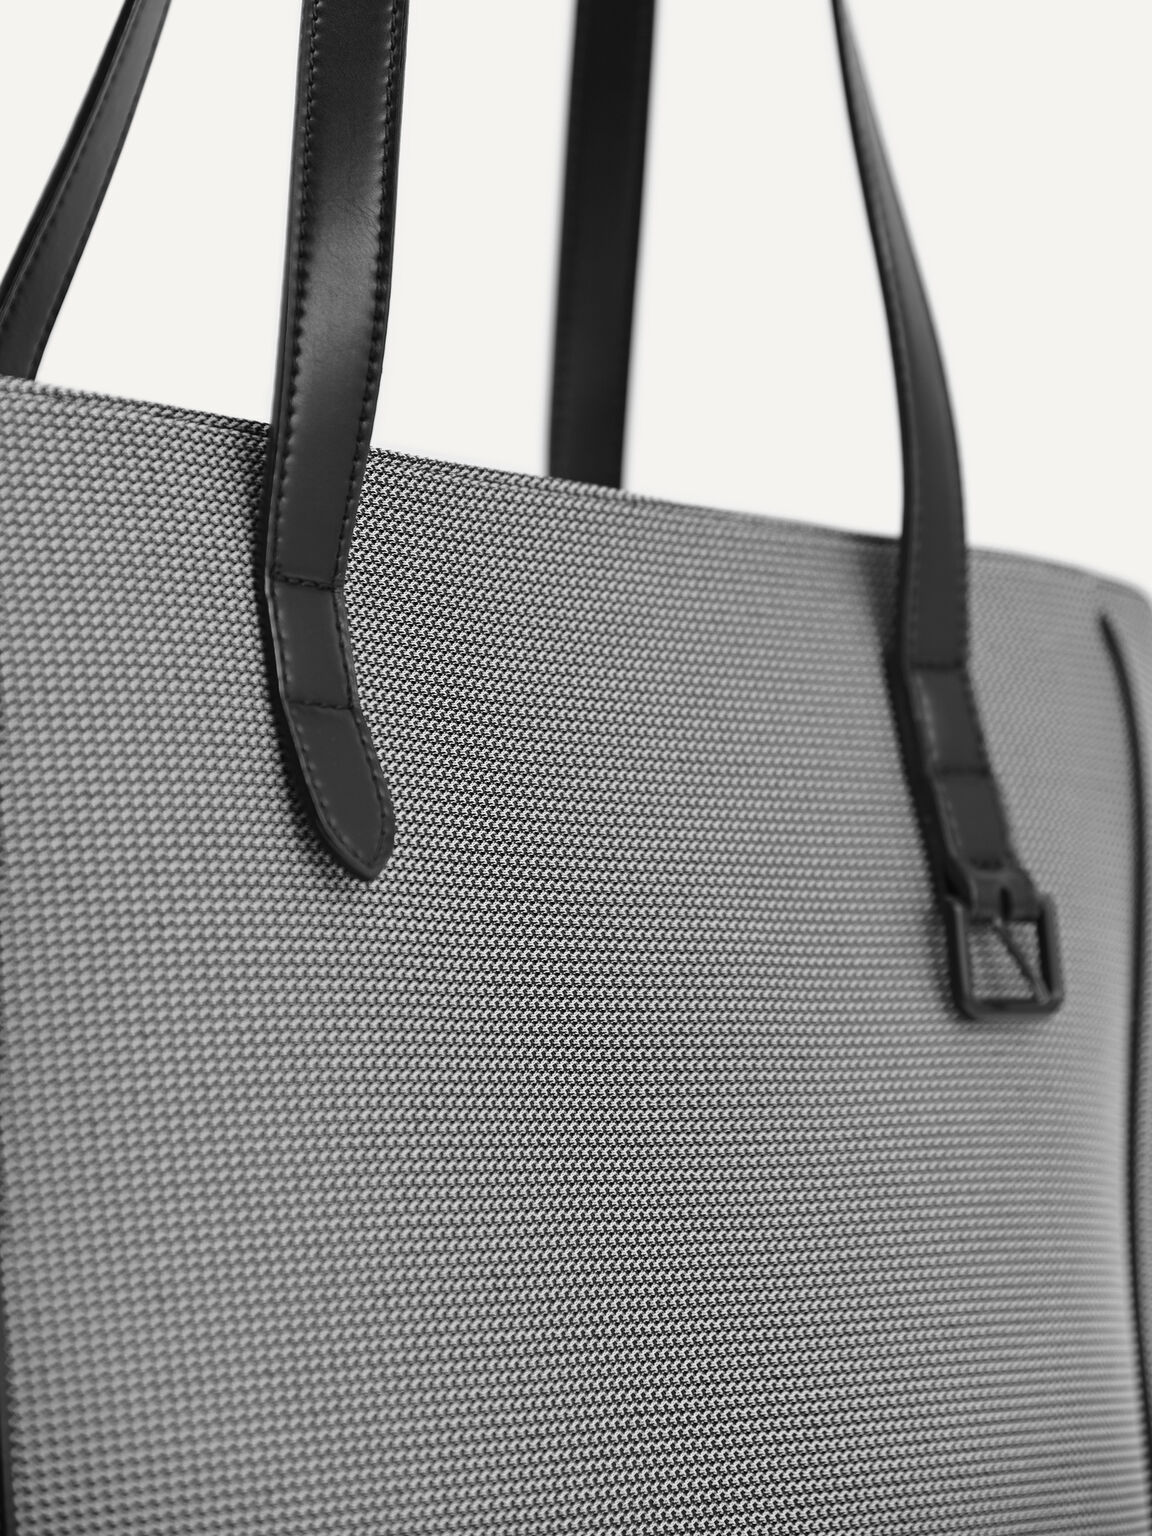 Knitted Monochrome Tote Bag, Dark Grey